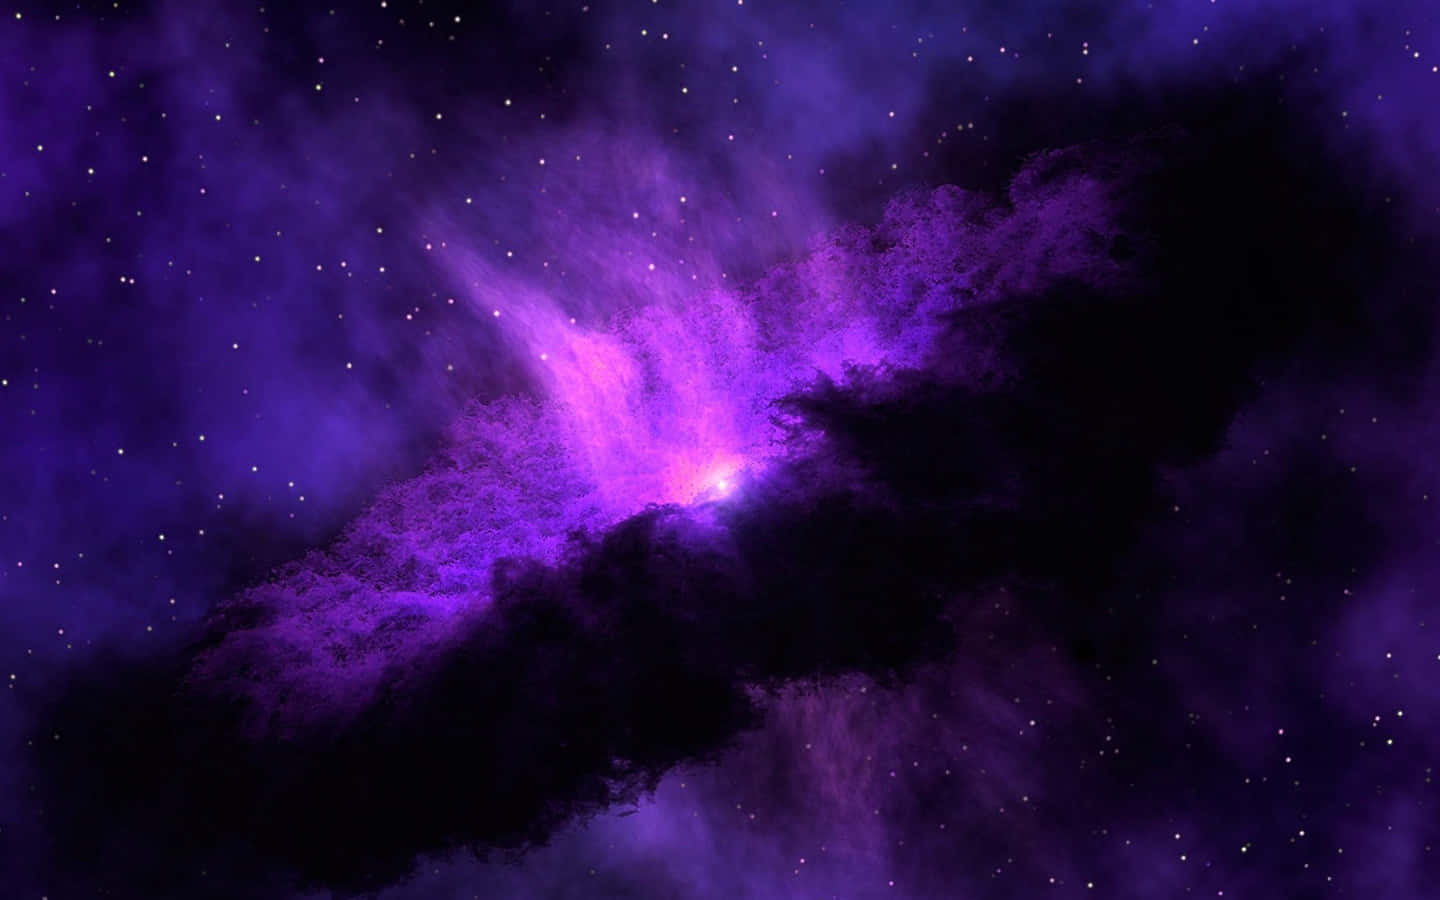 A Close-Up View of Nebula Clouds